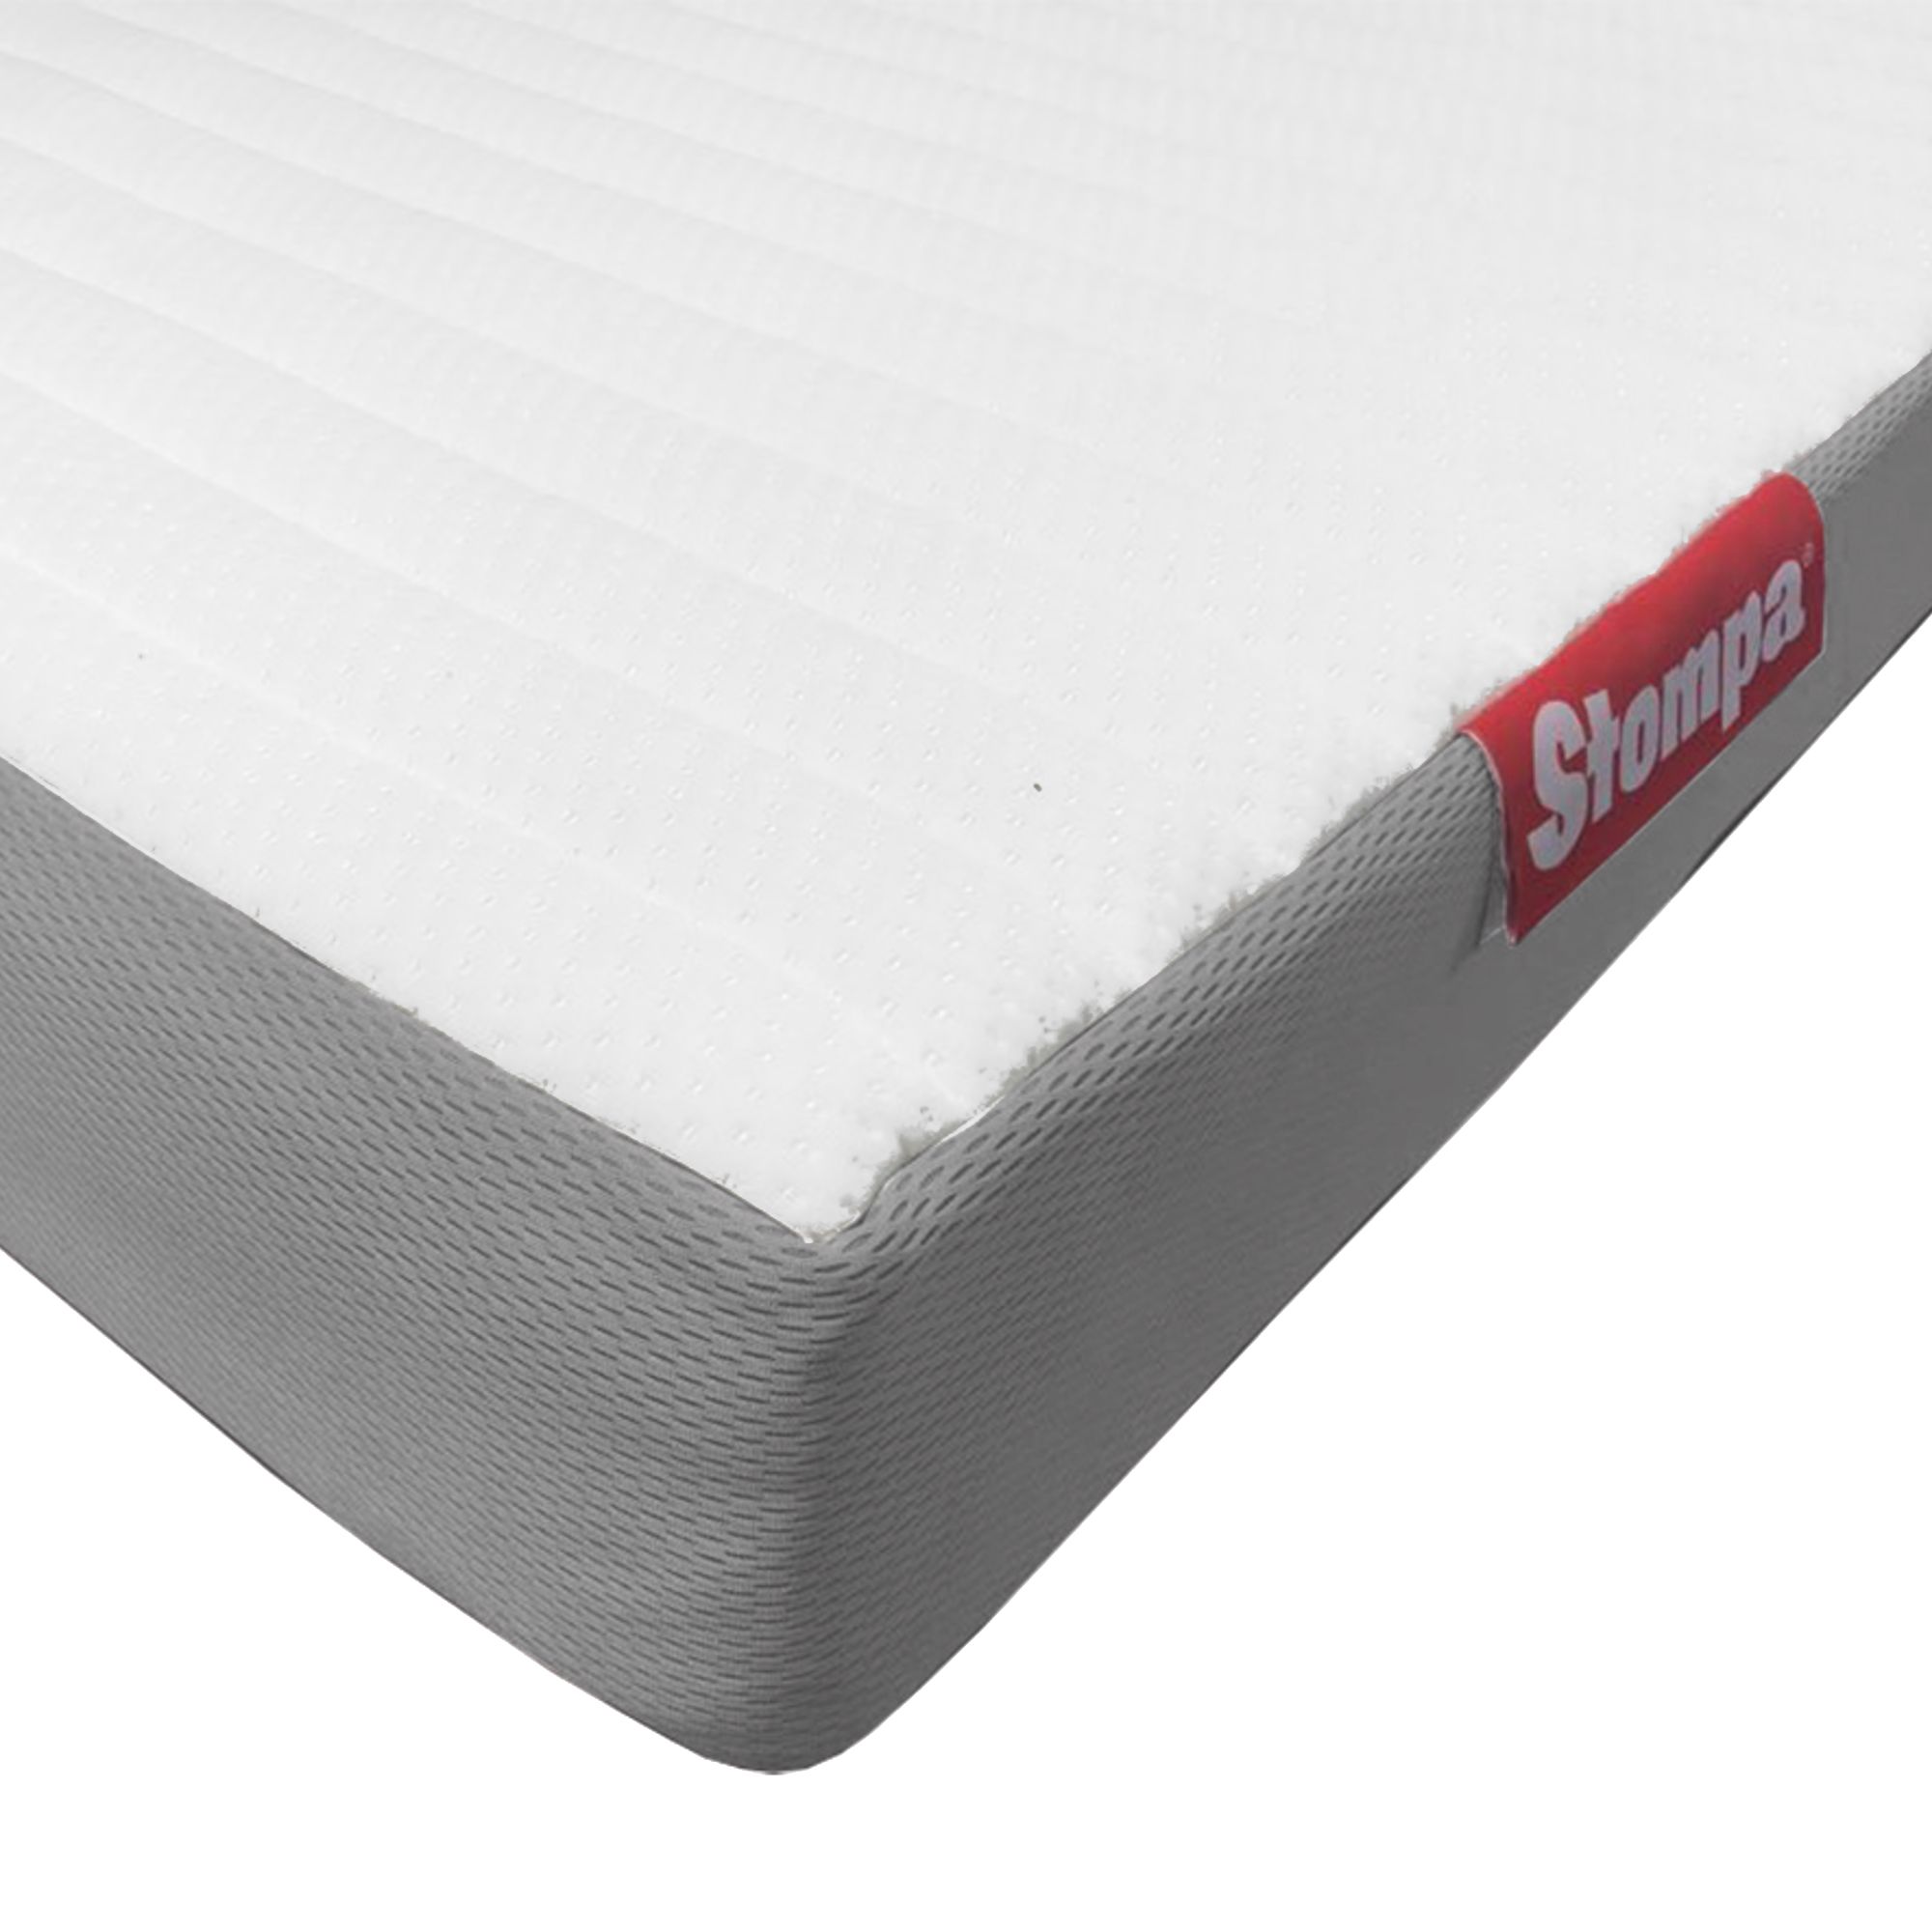 Photo of Stompa s flex airflow pocket spring mattress medium extra long single